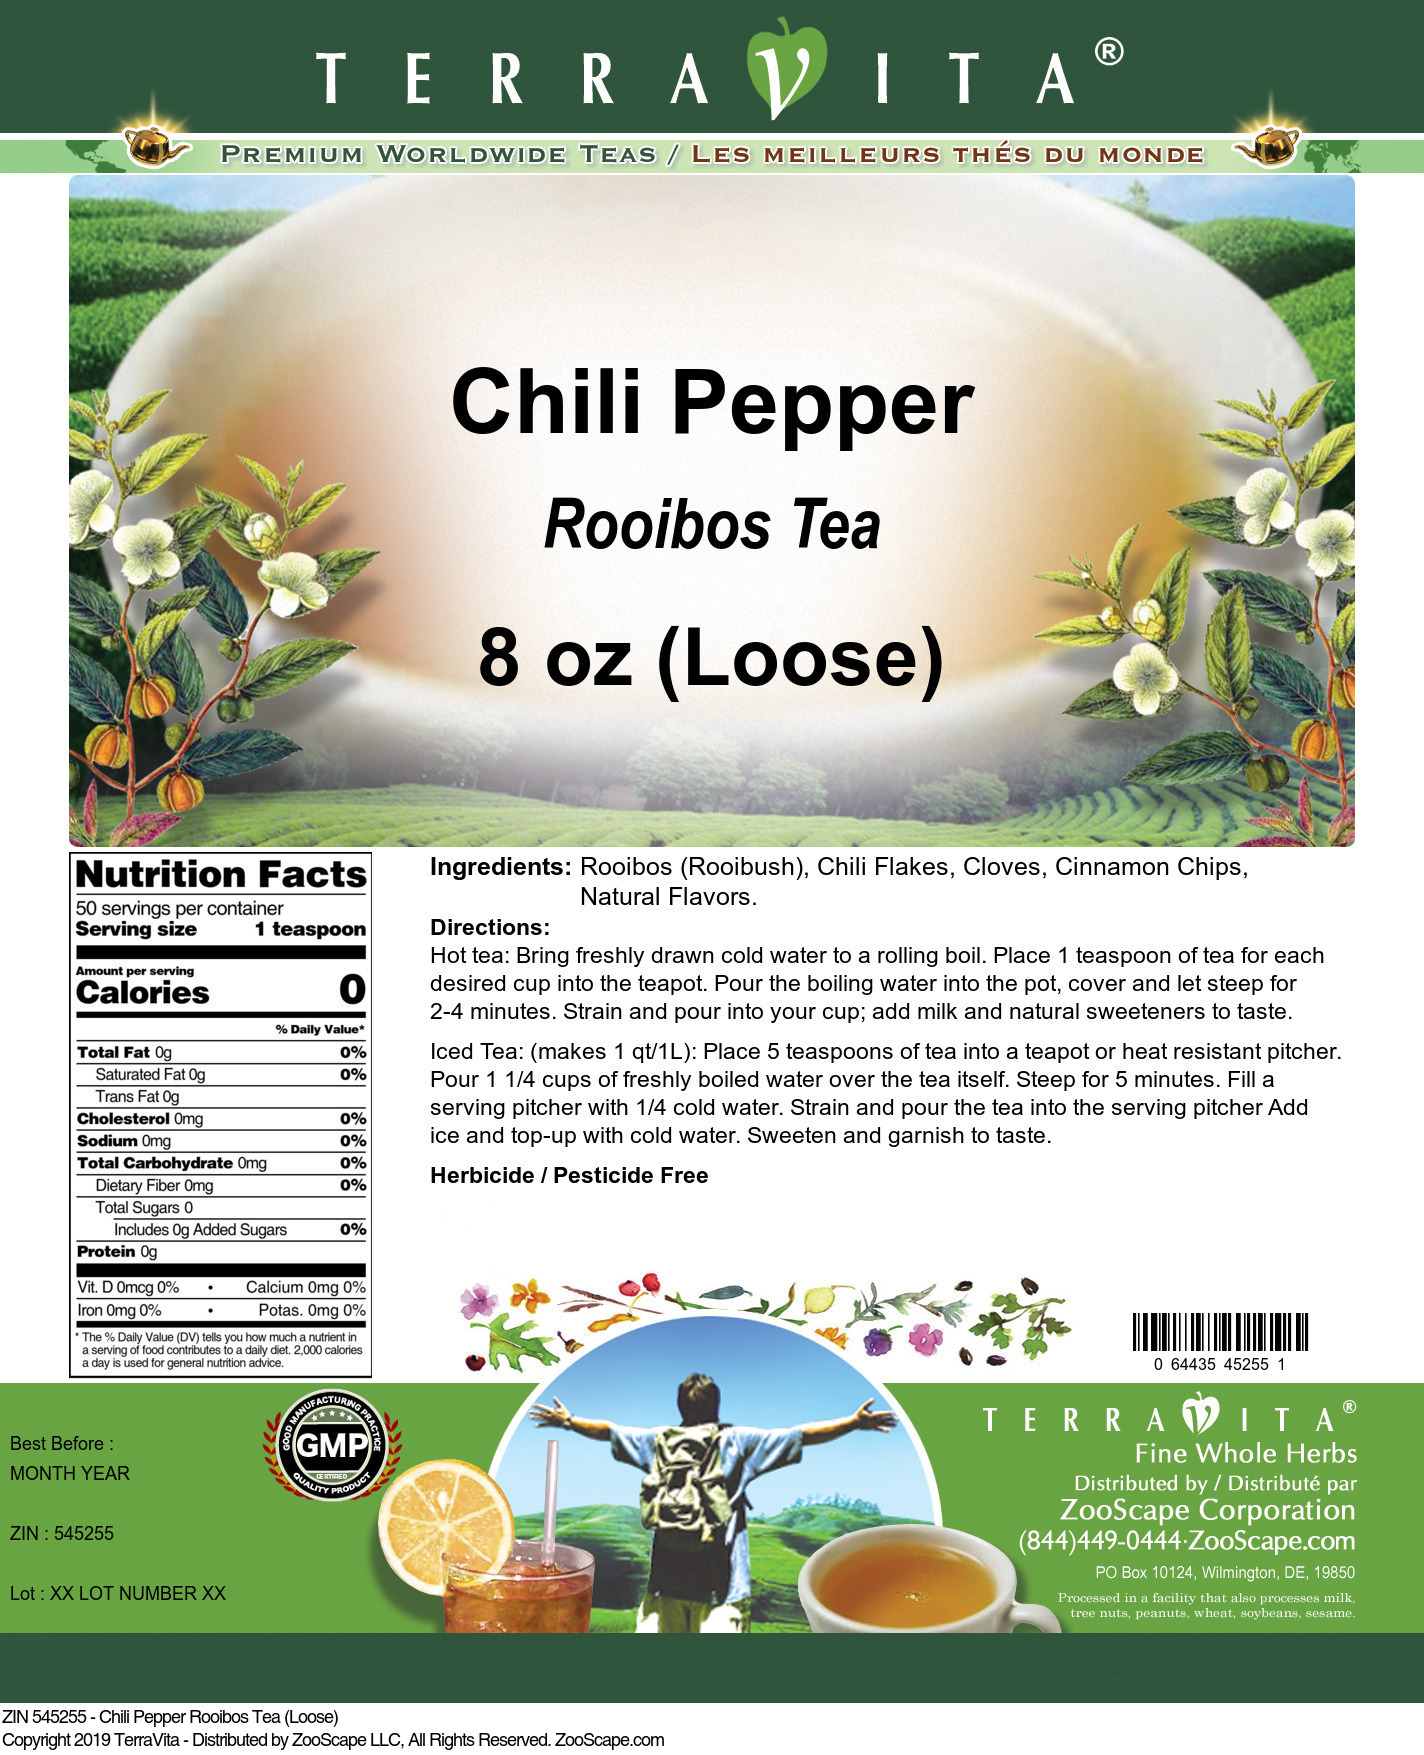 Chili Pepper Rooibos Tea (Loose) - Label